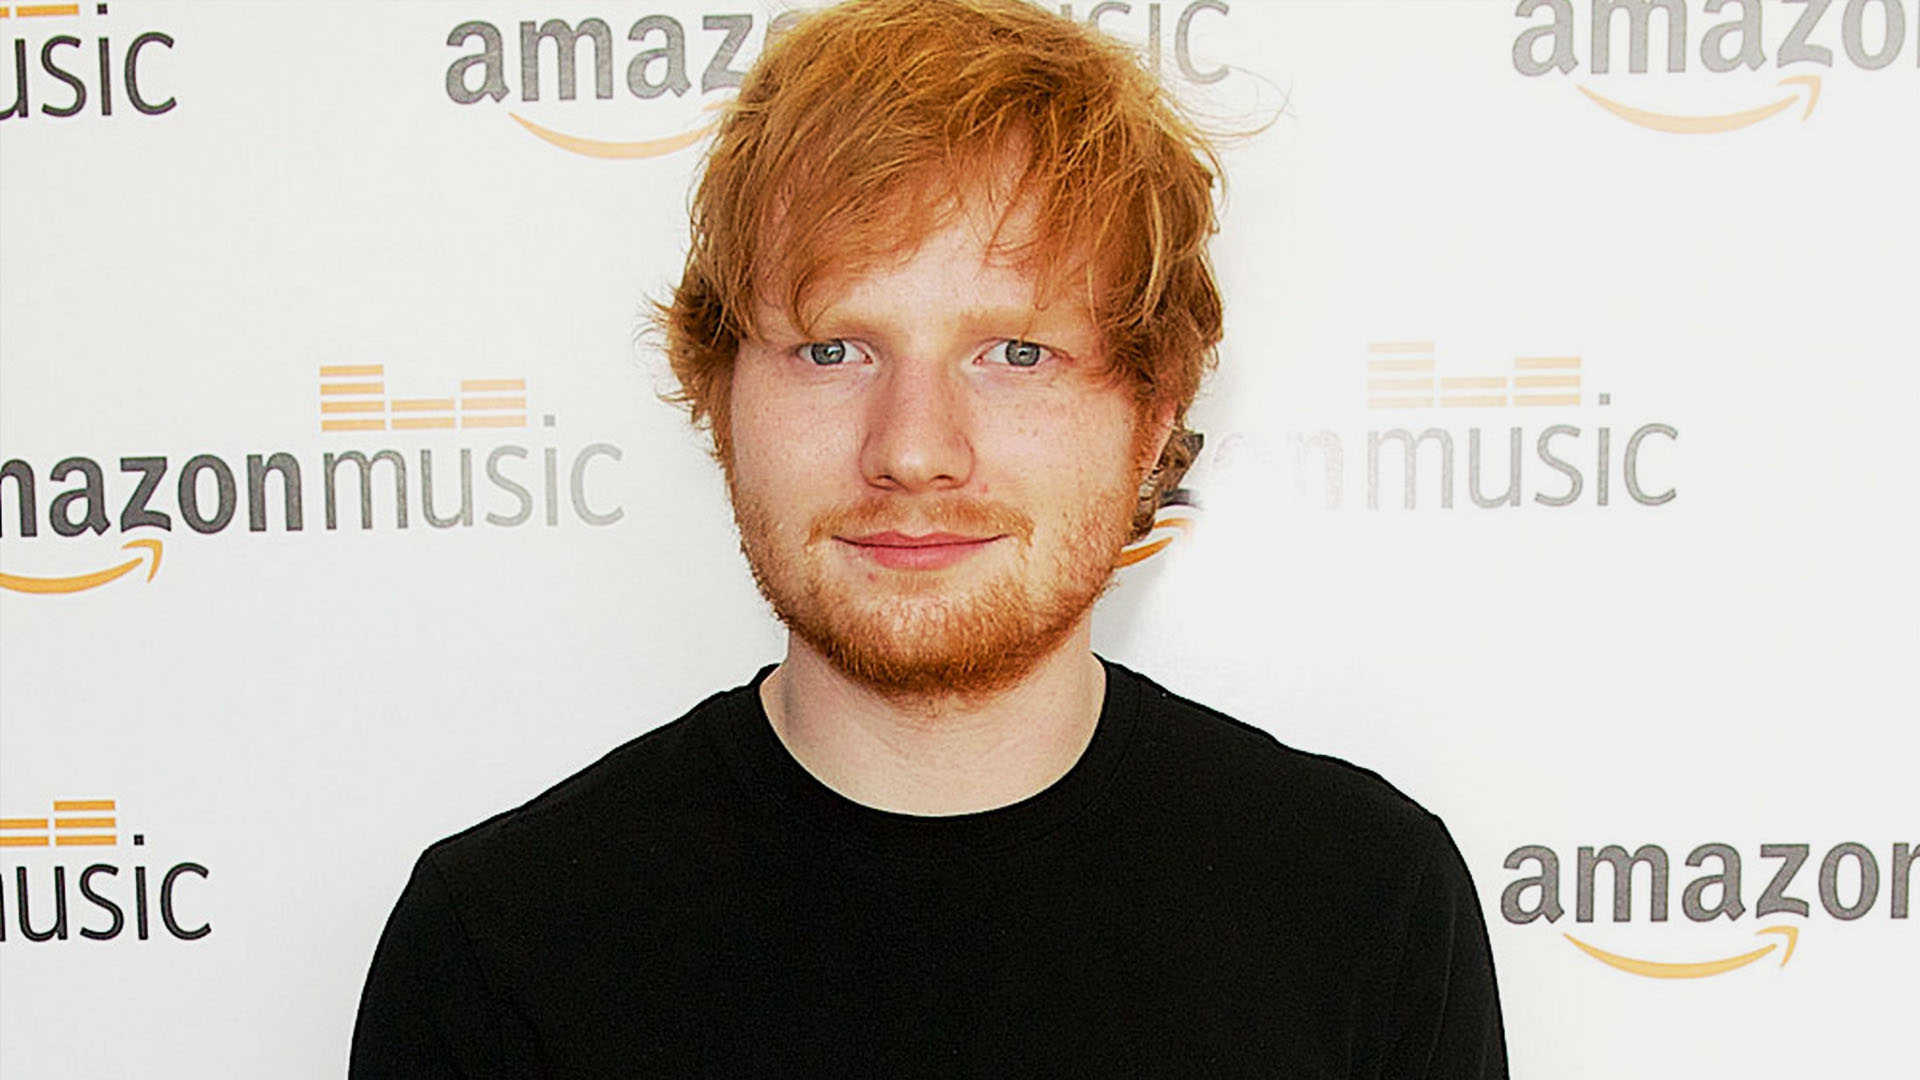 Ed Sheeran On Amazonmusic Wallpaper